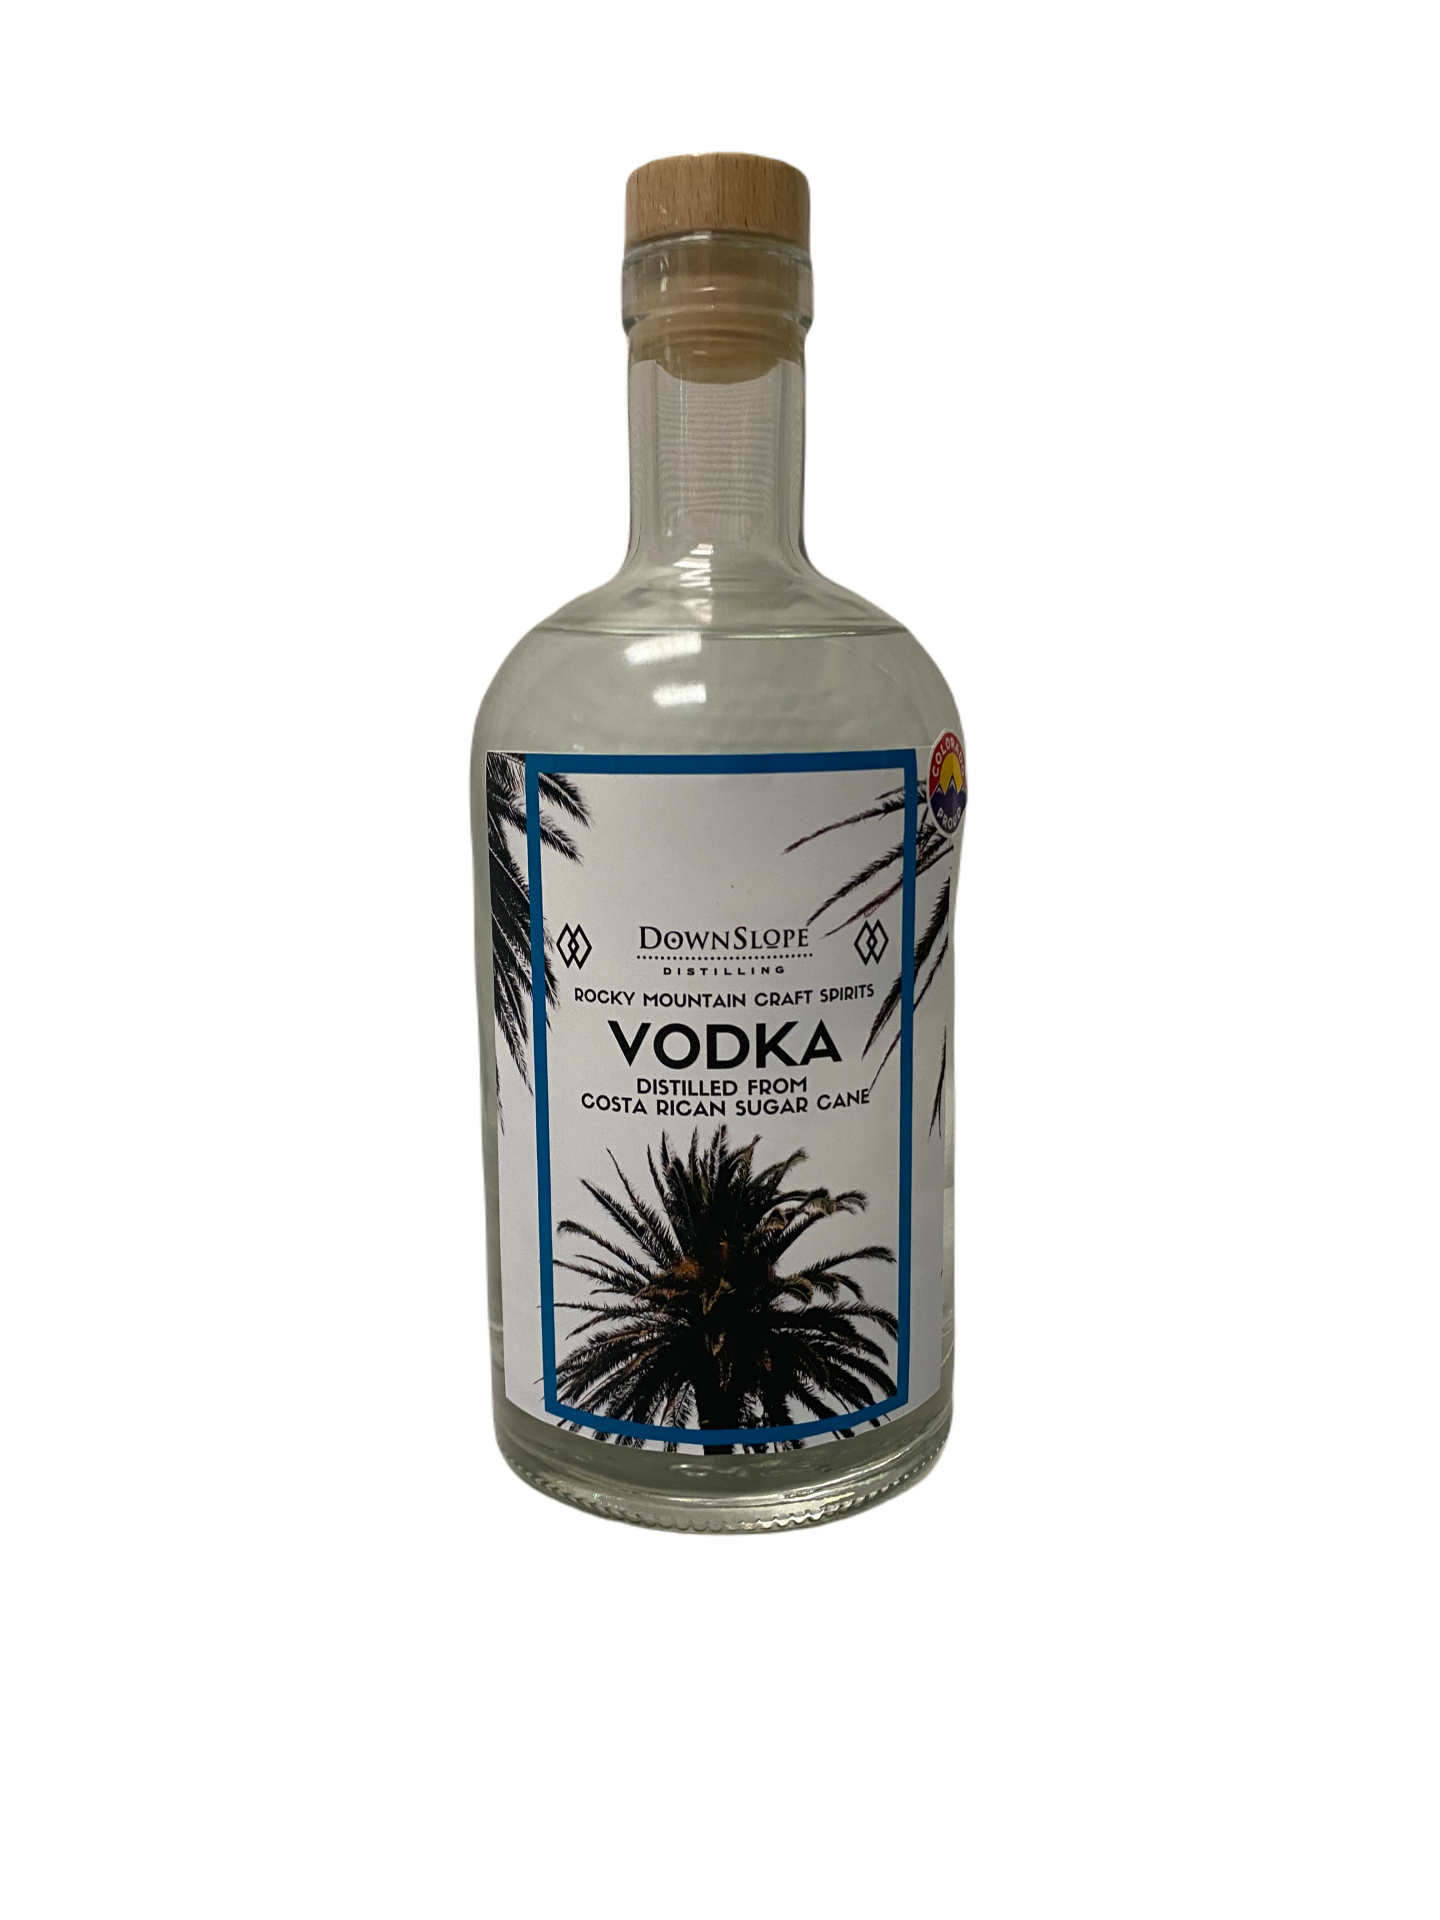 Vodka from Costa Rican Sugar Cane